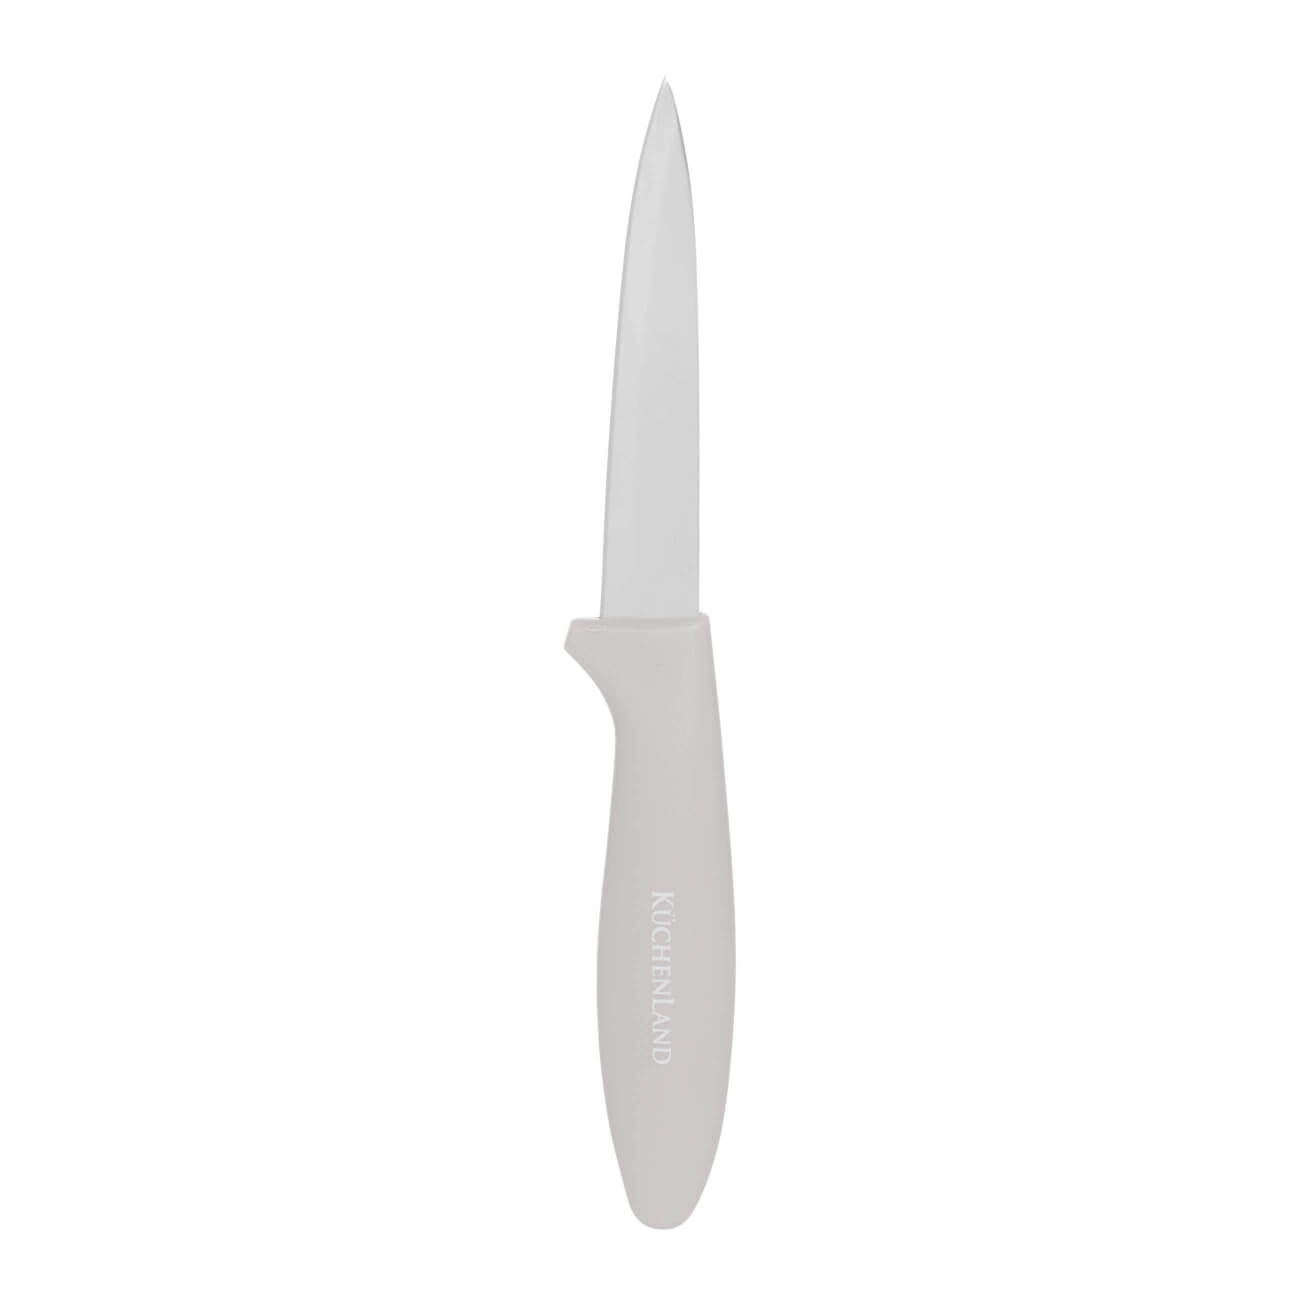 Нож для чистки овощей, 9 см, сталь/пластик, серо-коричневый, Regular нож для чистки овощей essential k2210575